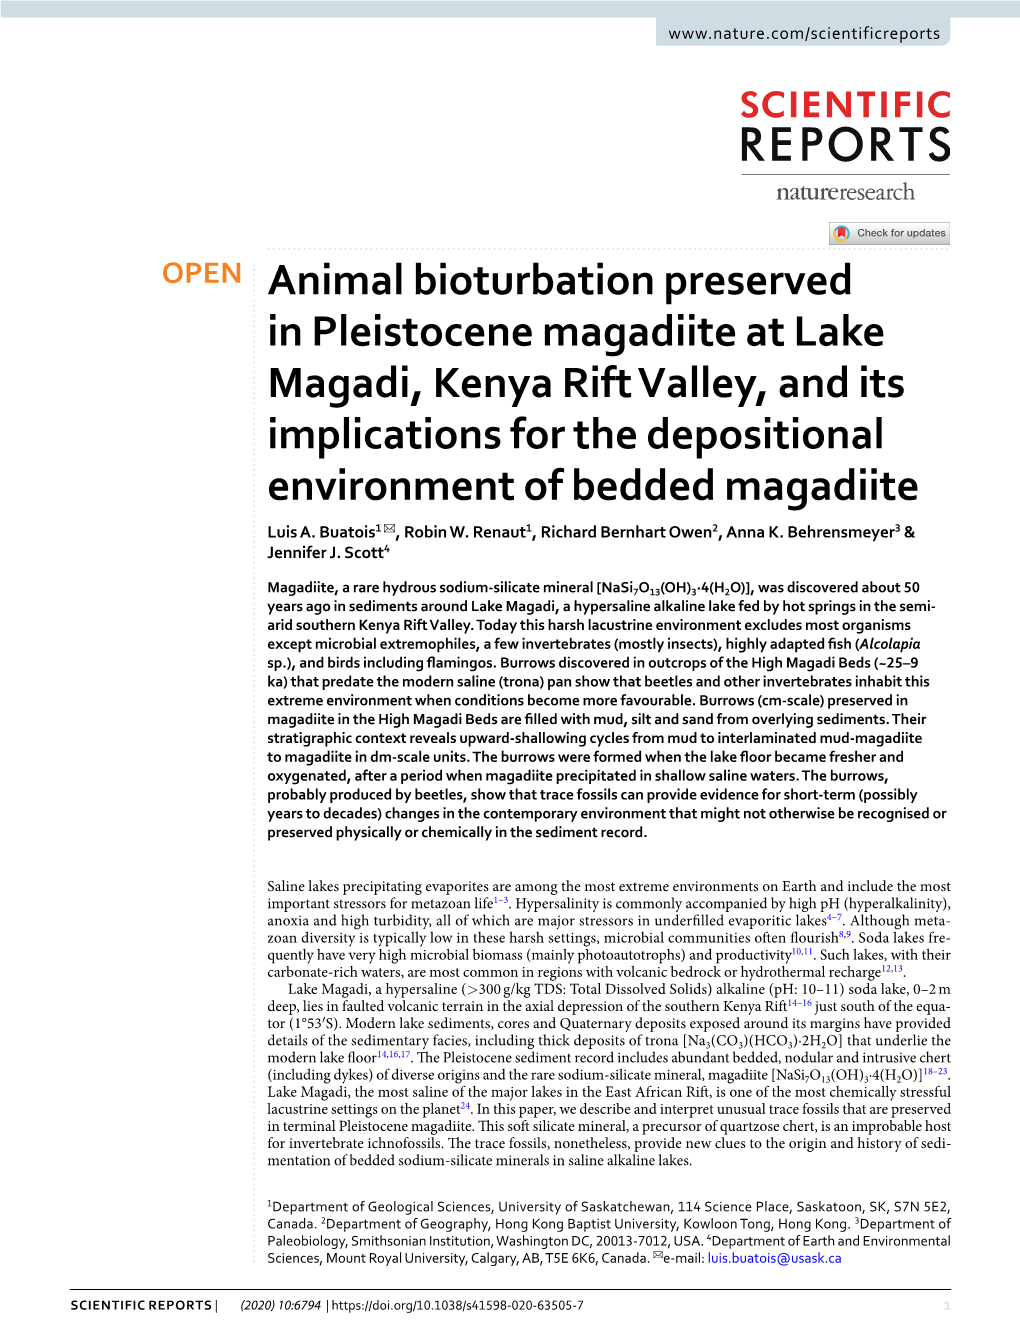 Animal Bioturbation Preserved in Pleistocene Magadiite at Lake